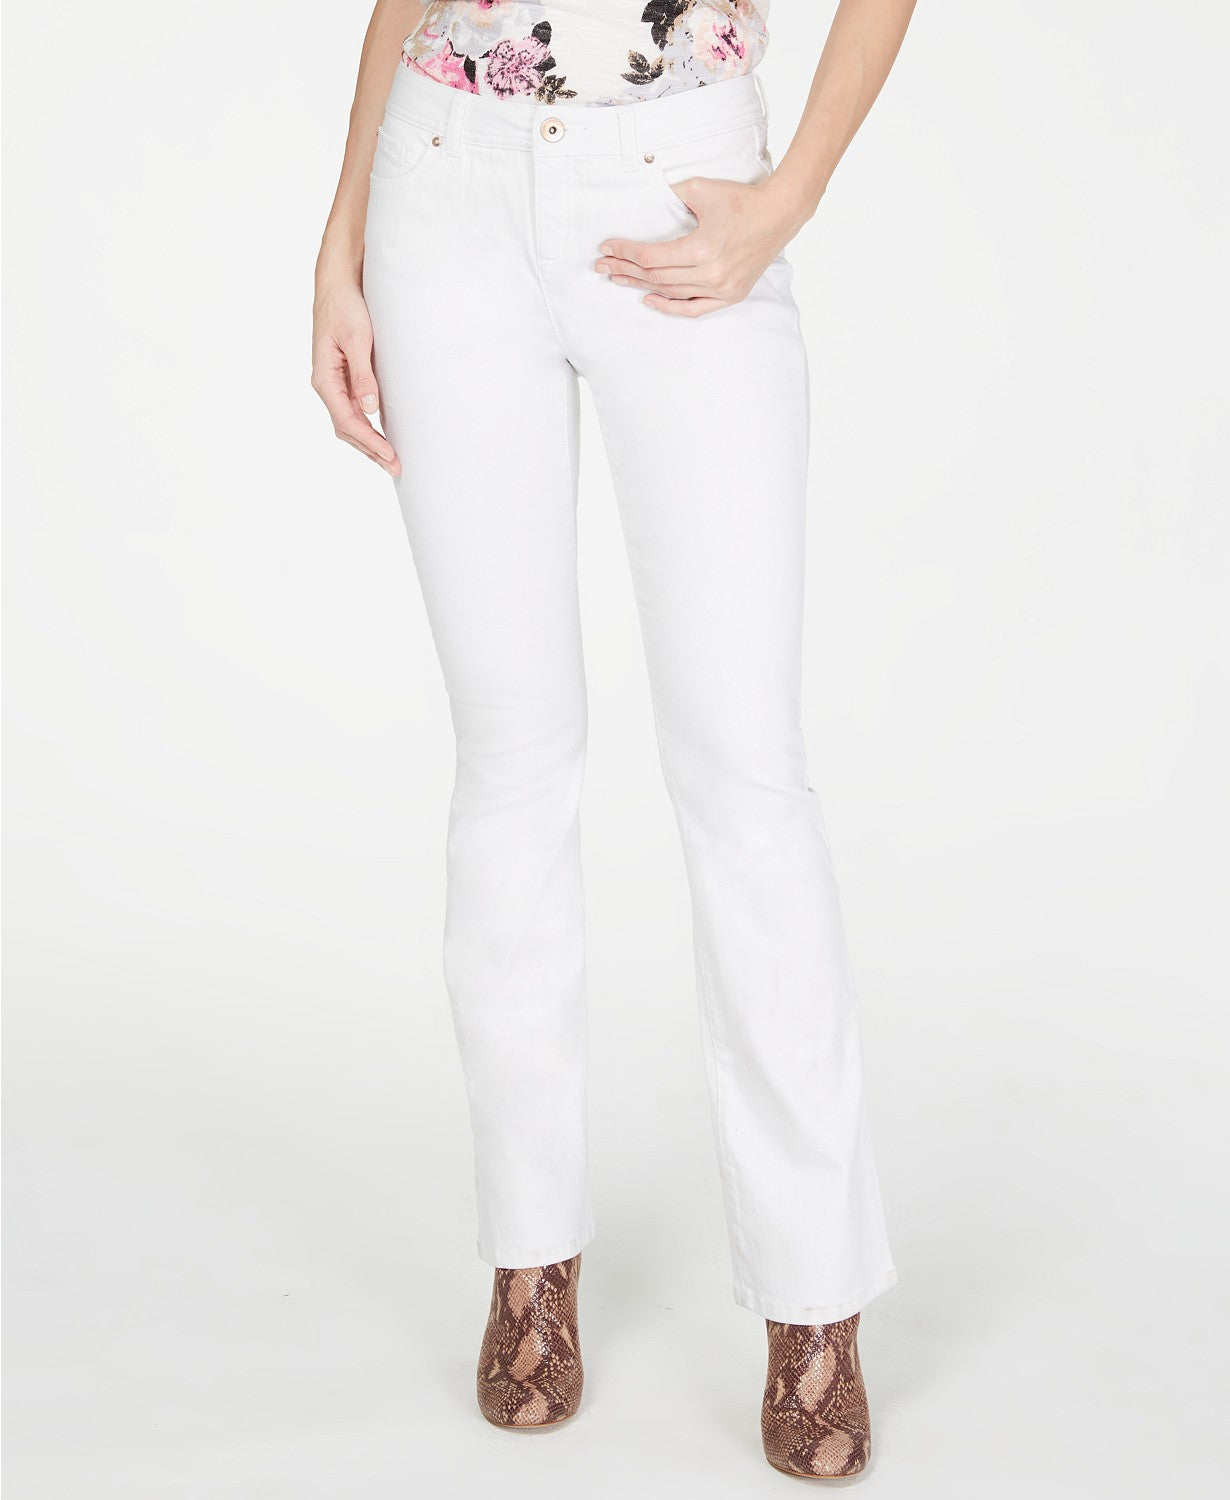 Inc International Concepts Womens Petite White Boot-cut Jeans